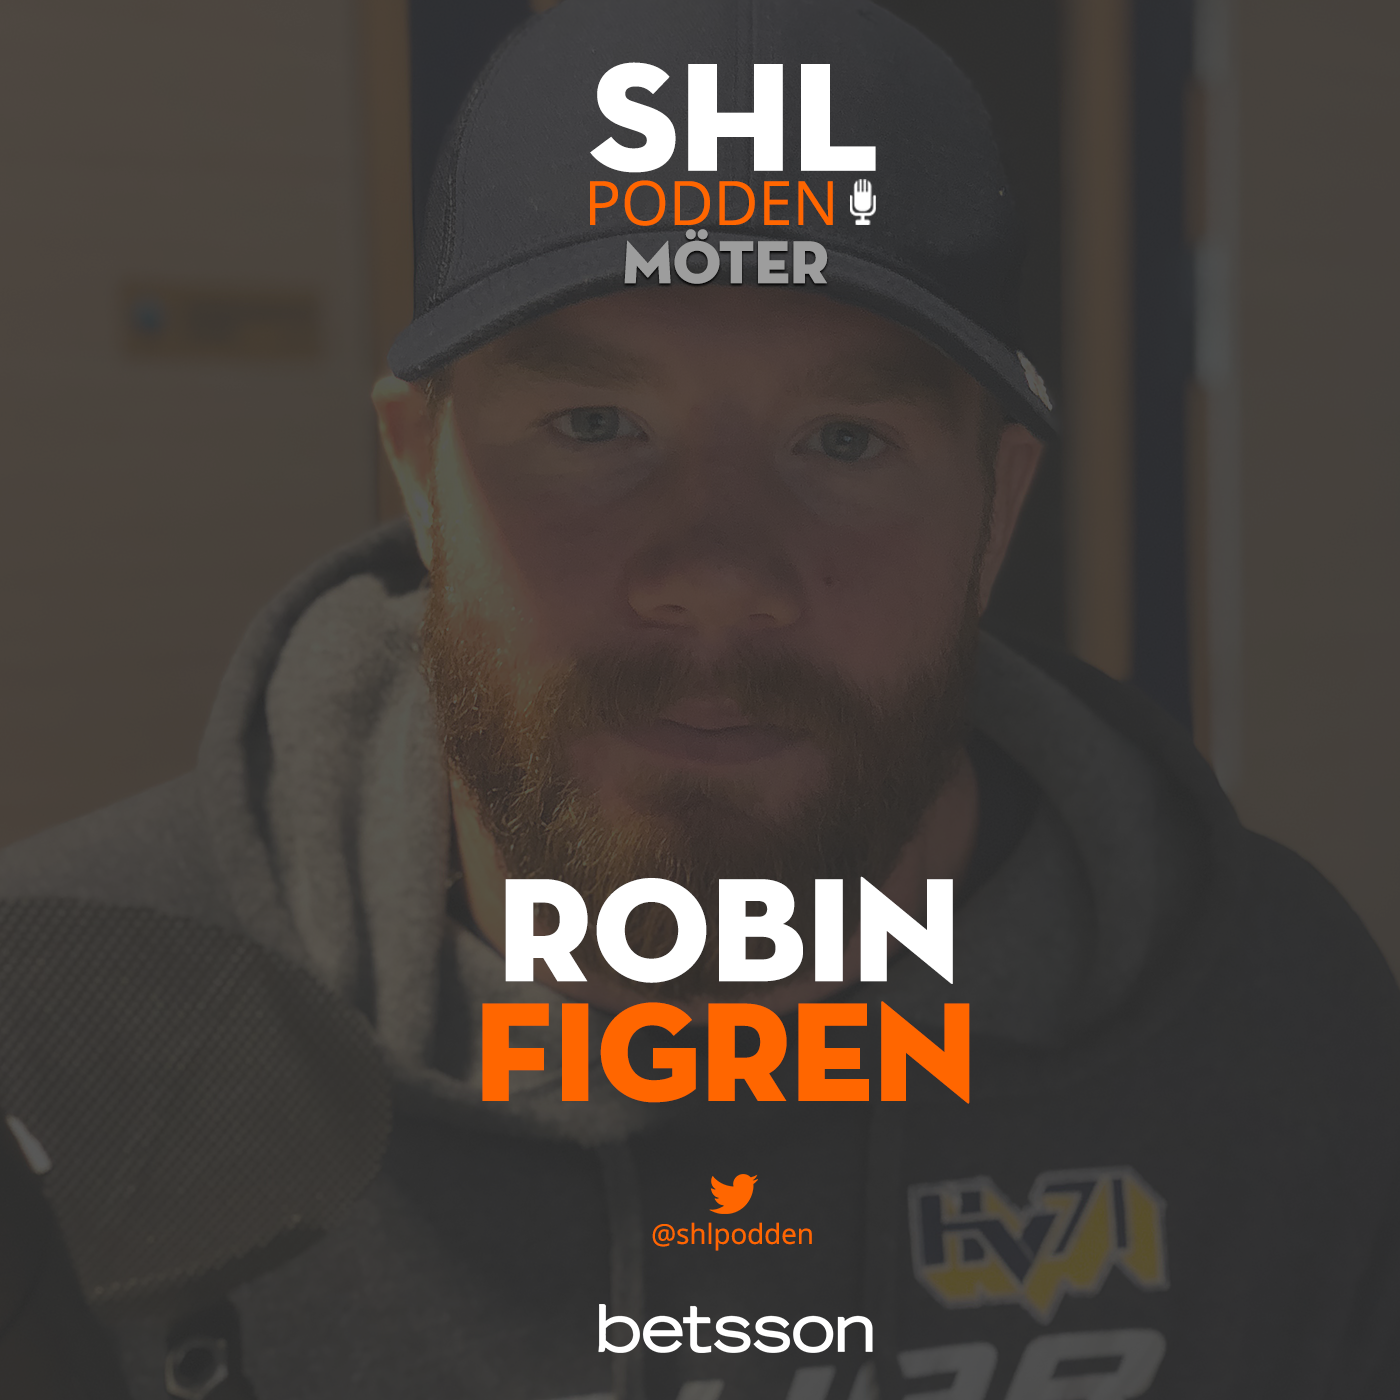 SHL-podden möter Robin Figren